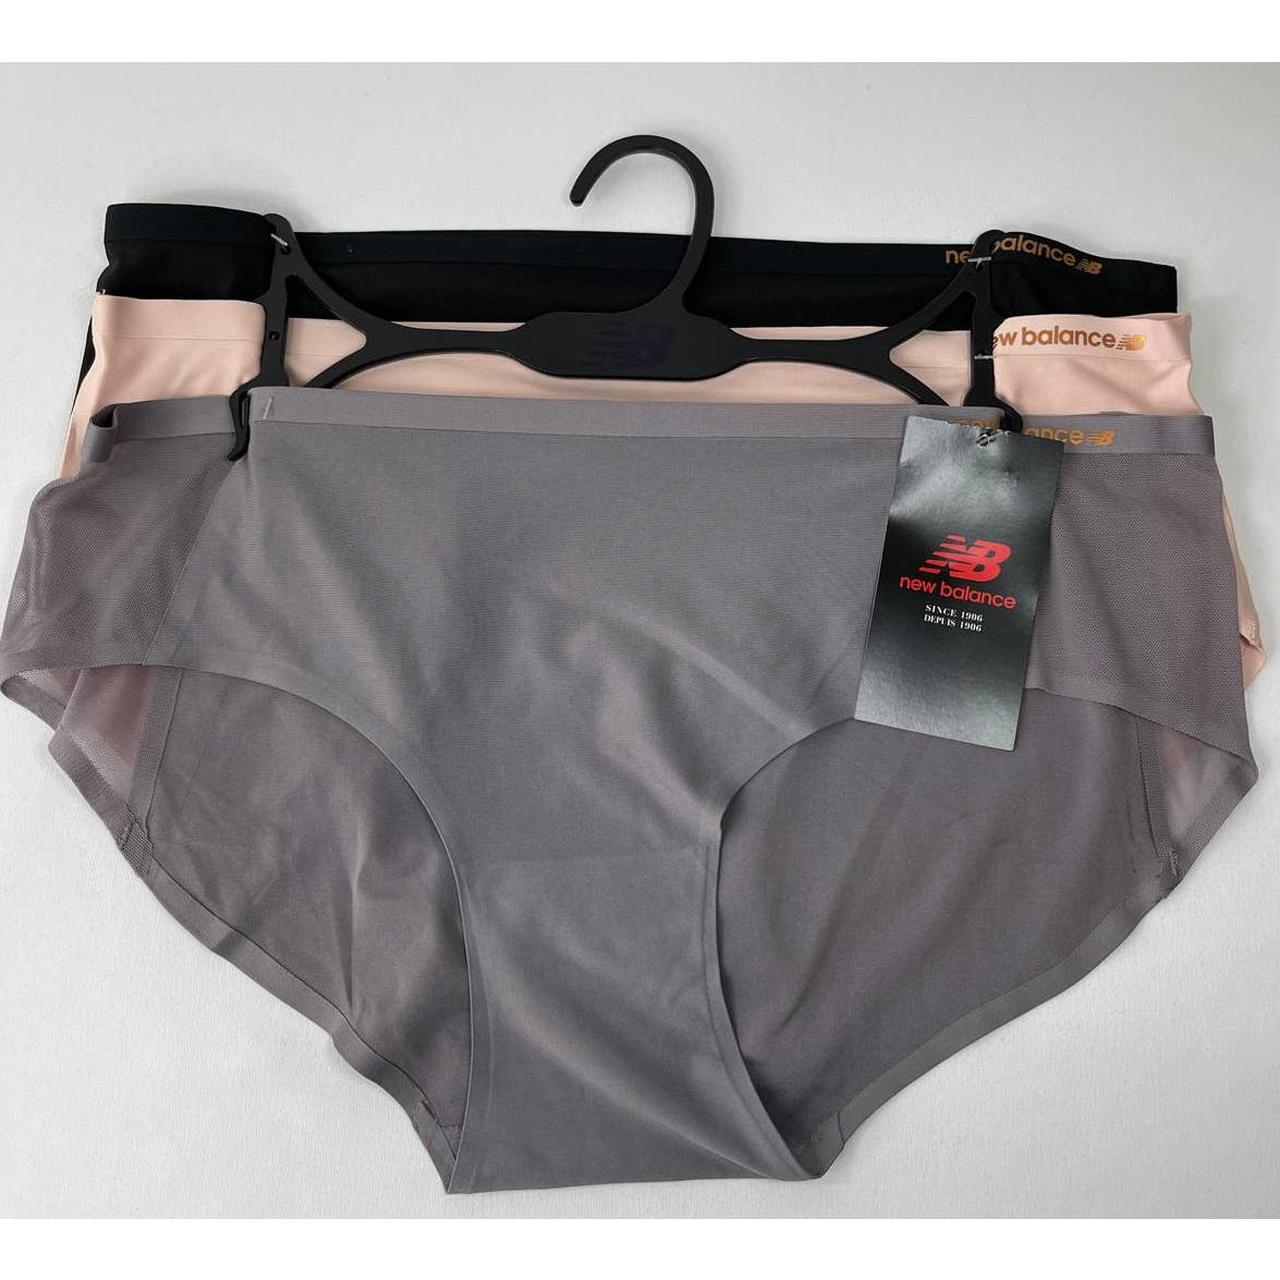 Women's New Balance Underwear, New & Used